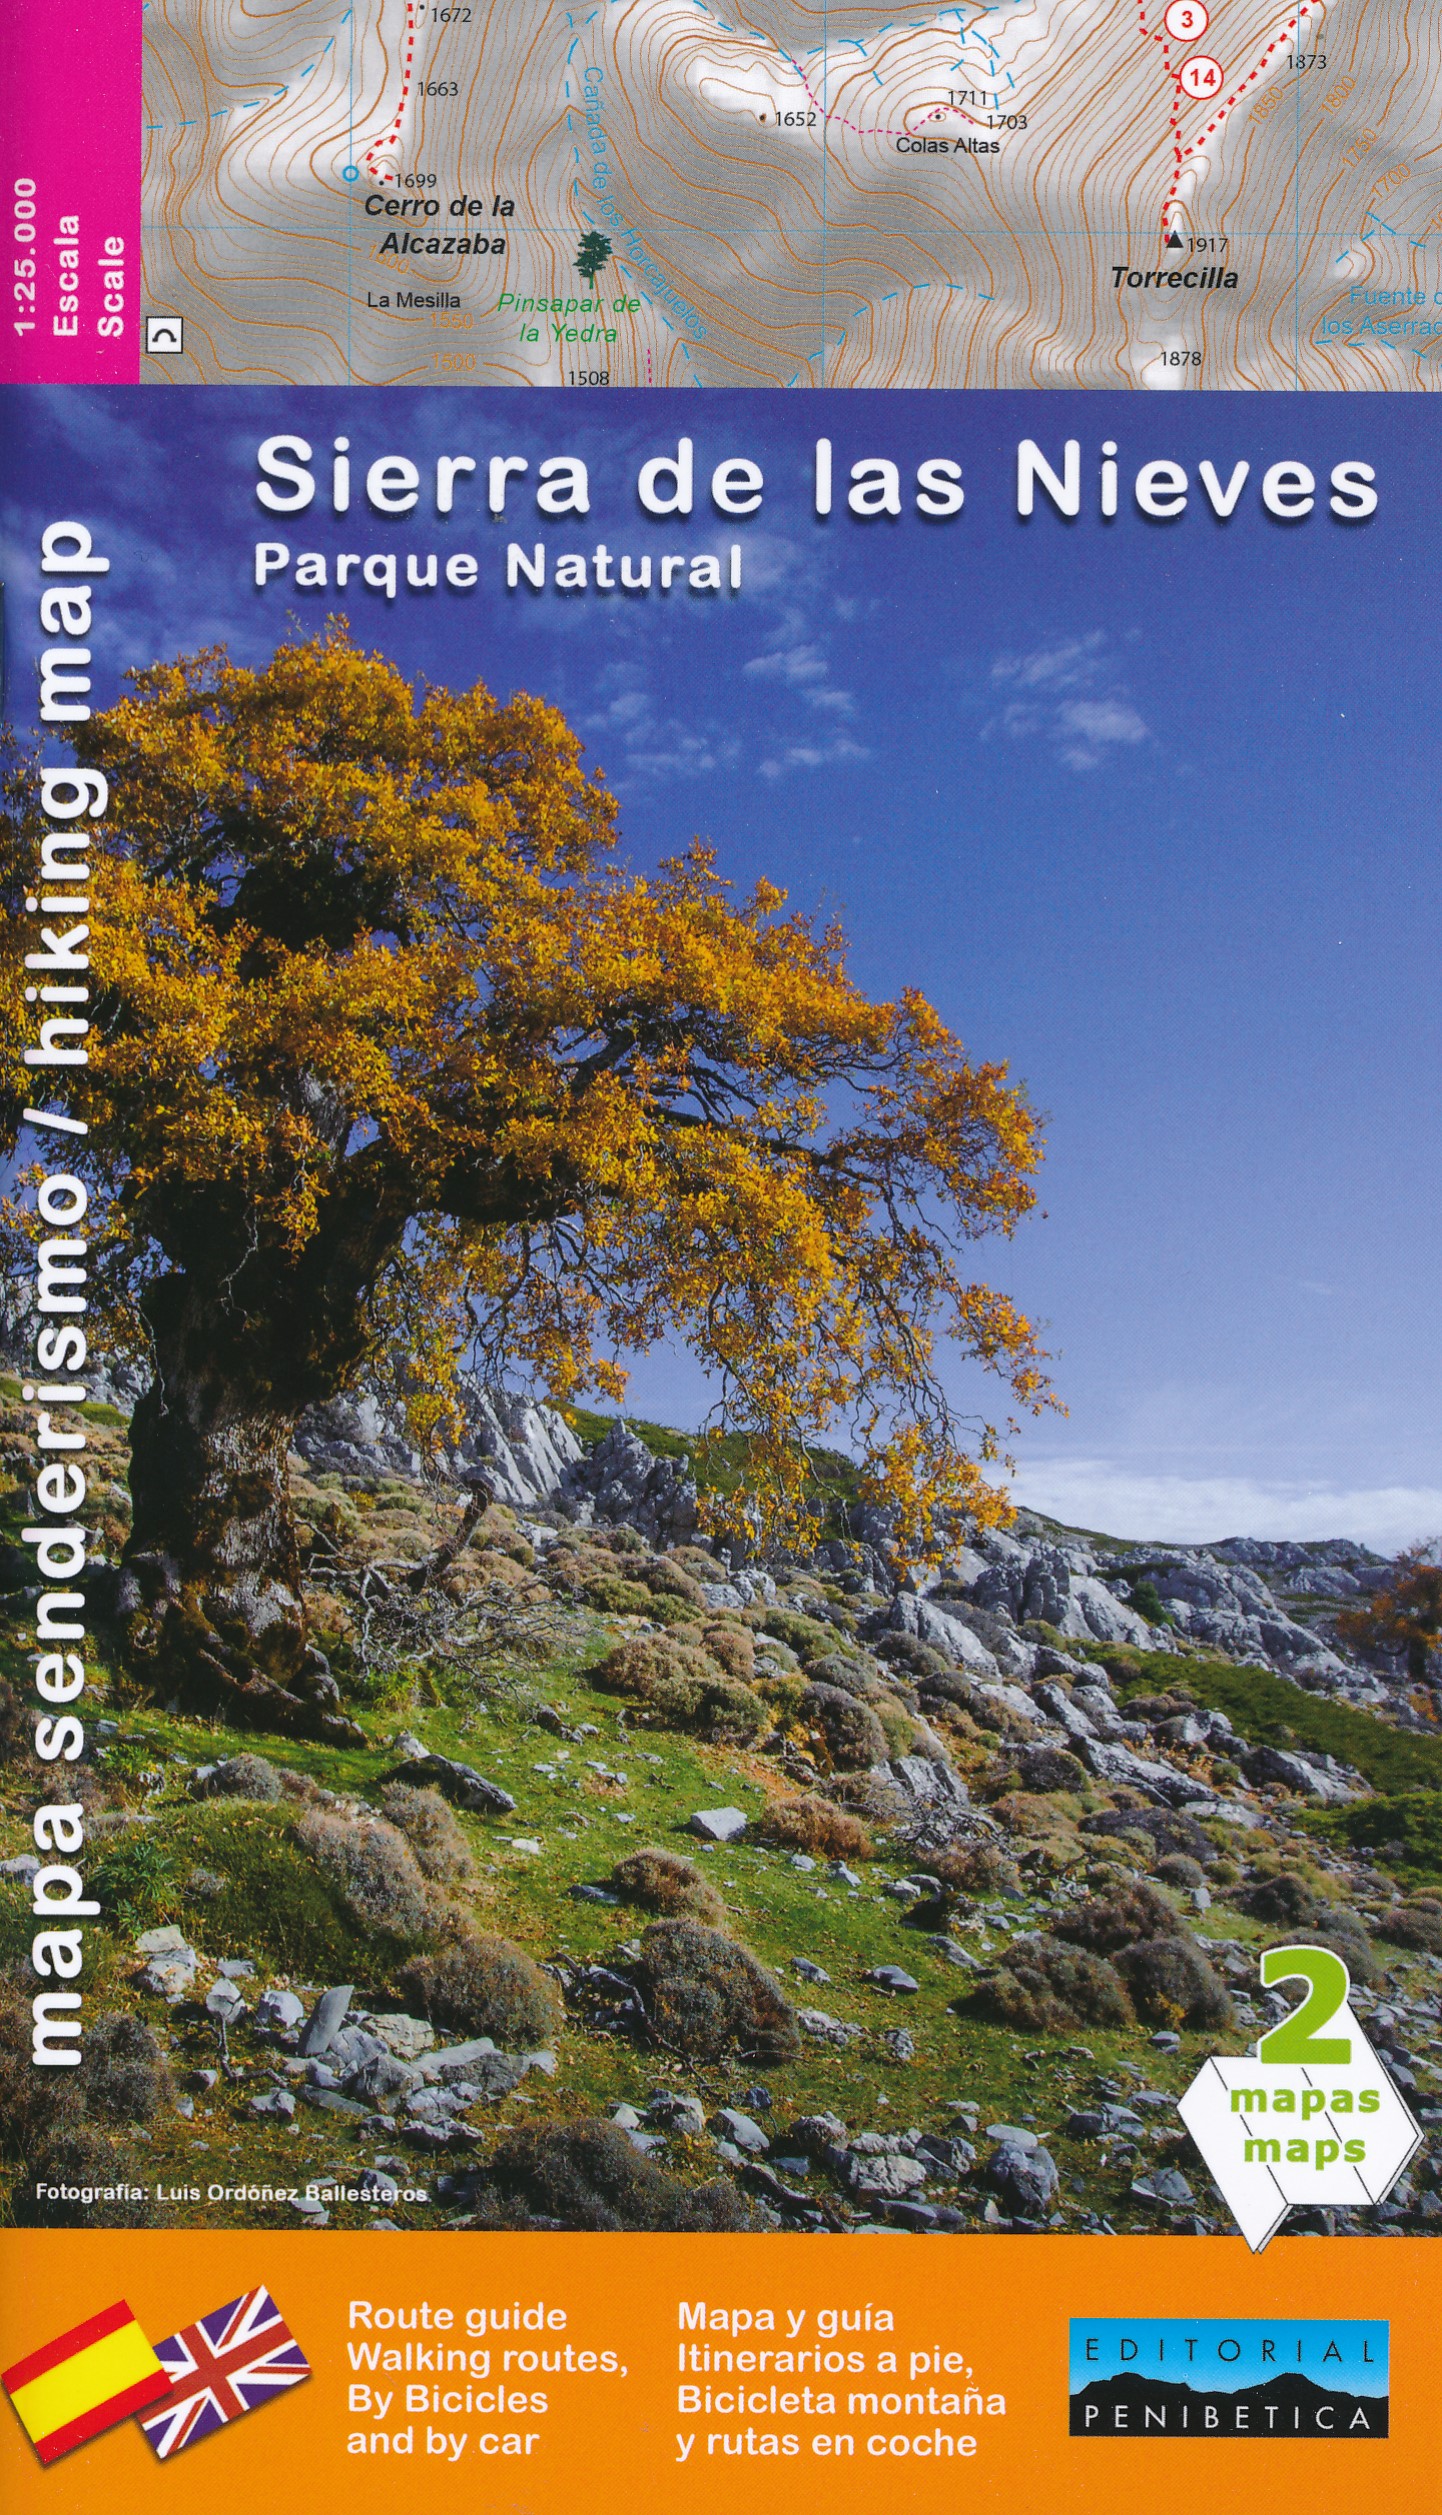 Online bestellen: Wandelkaart Sierra de las Nieves | Editorial Penibetica